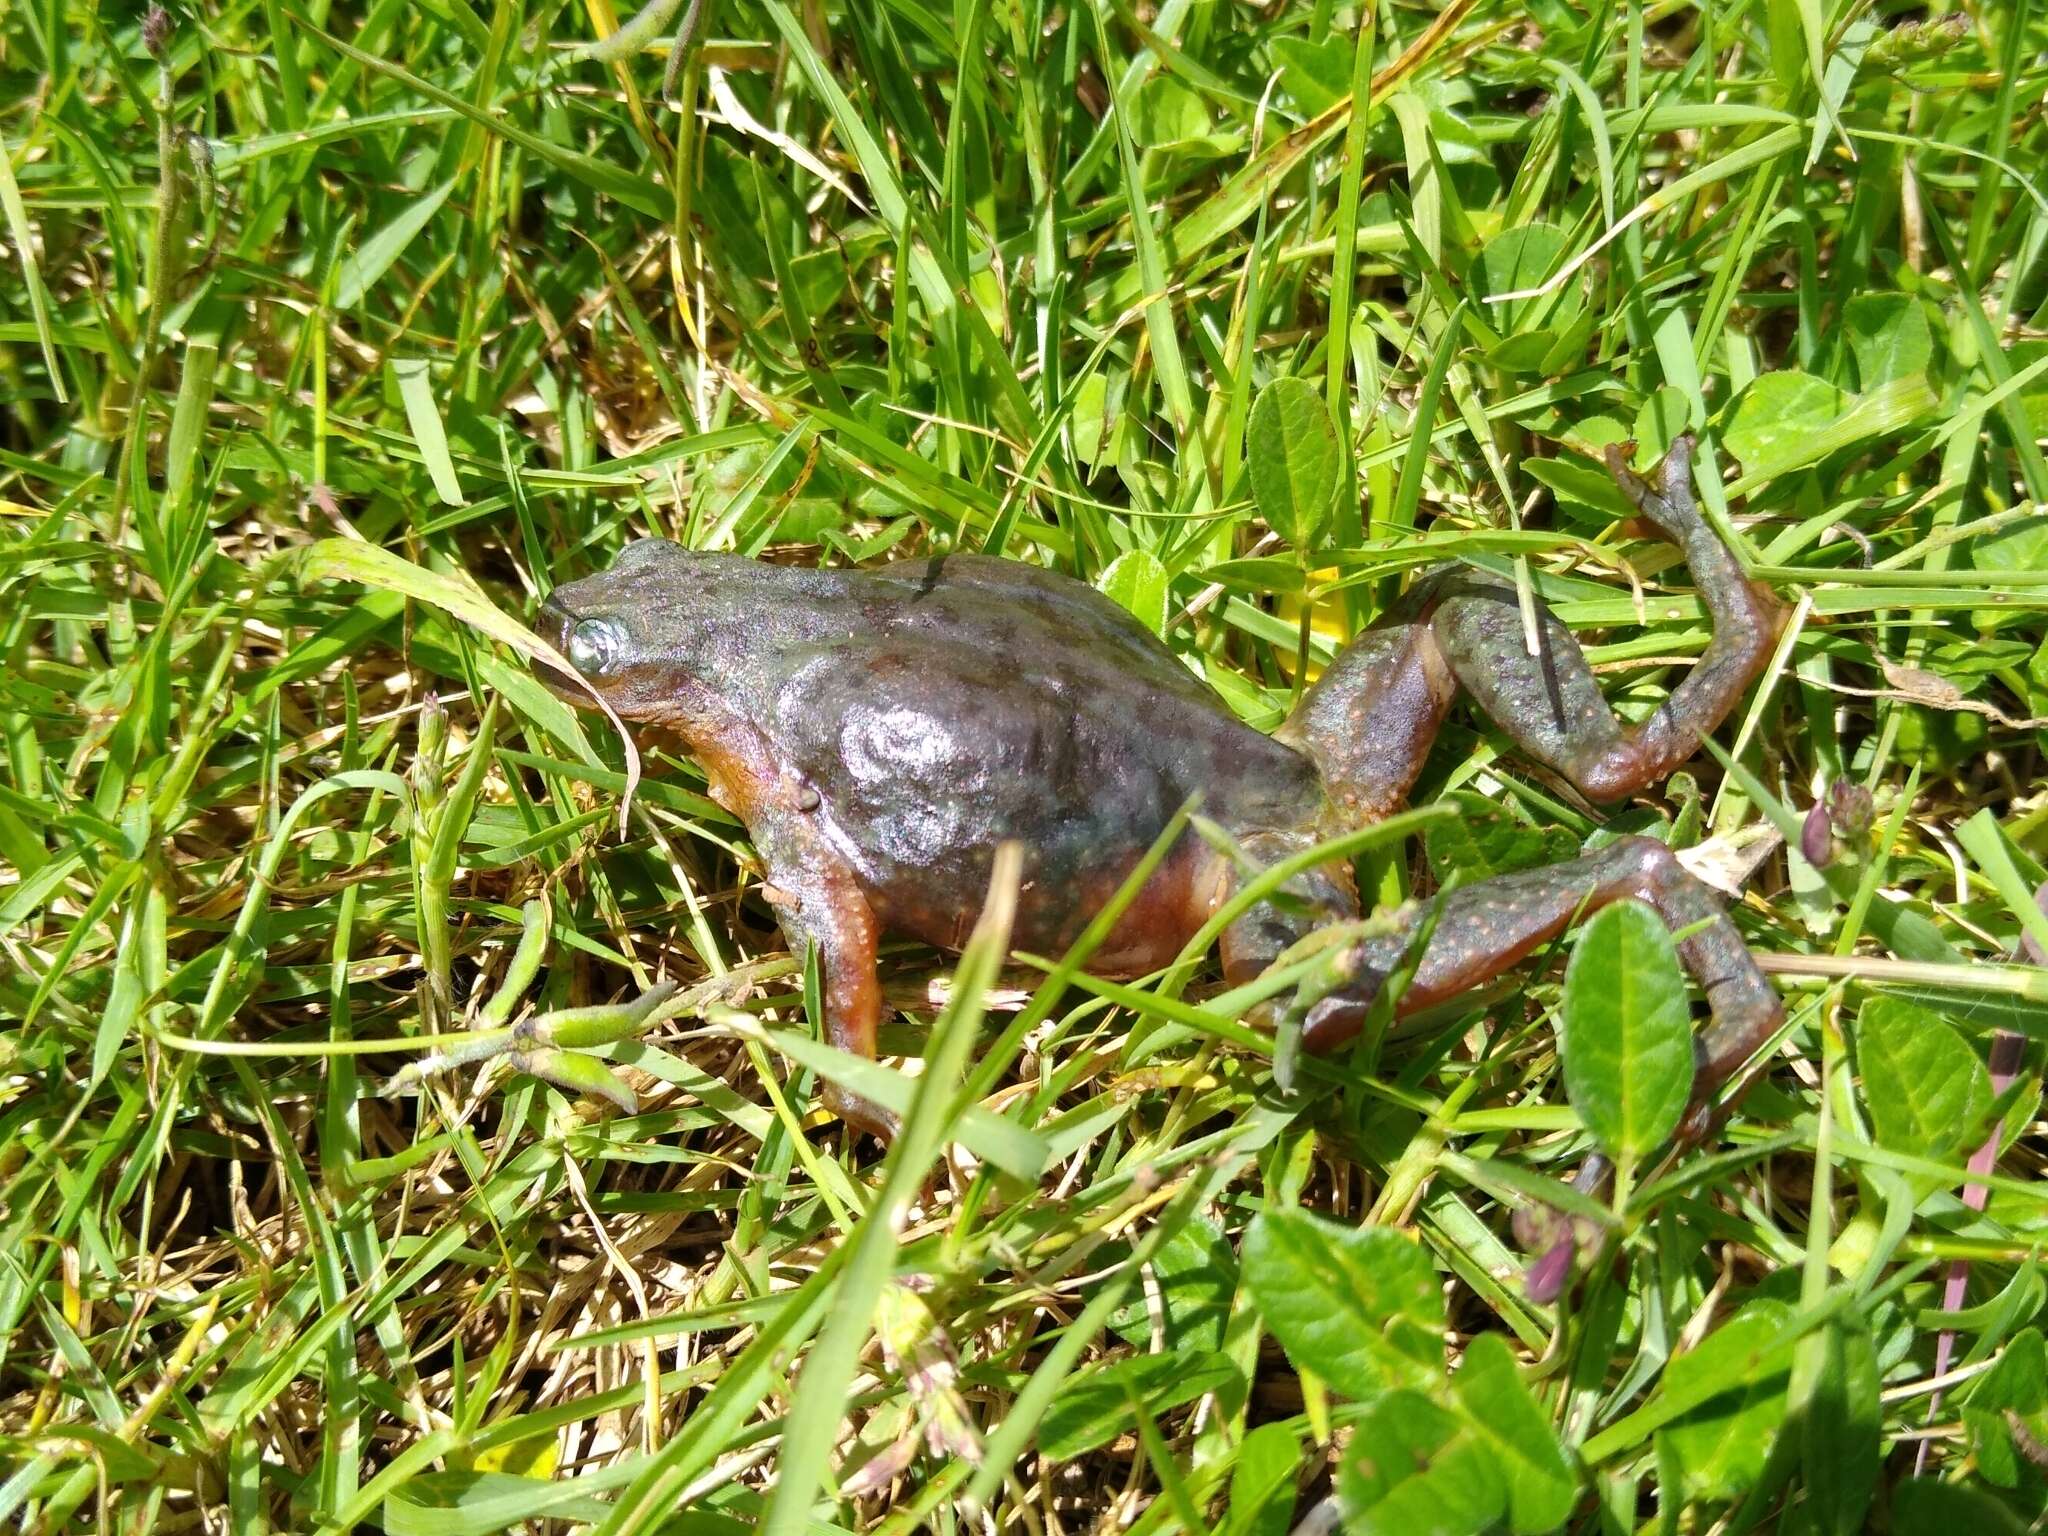 Image of Thorny Spikethumb Frog